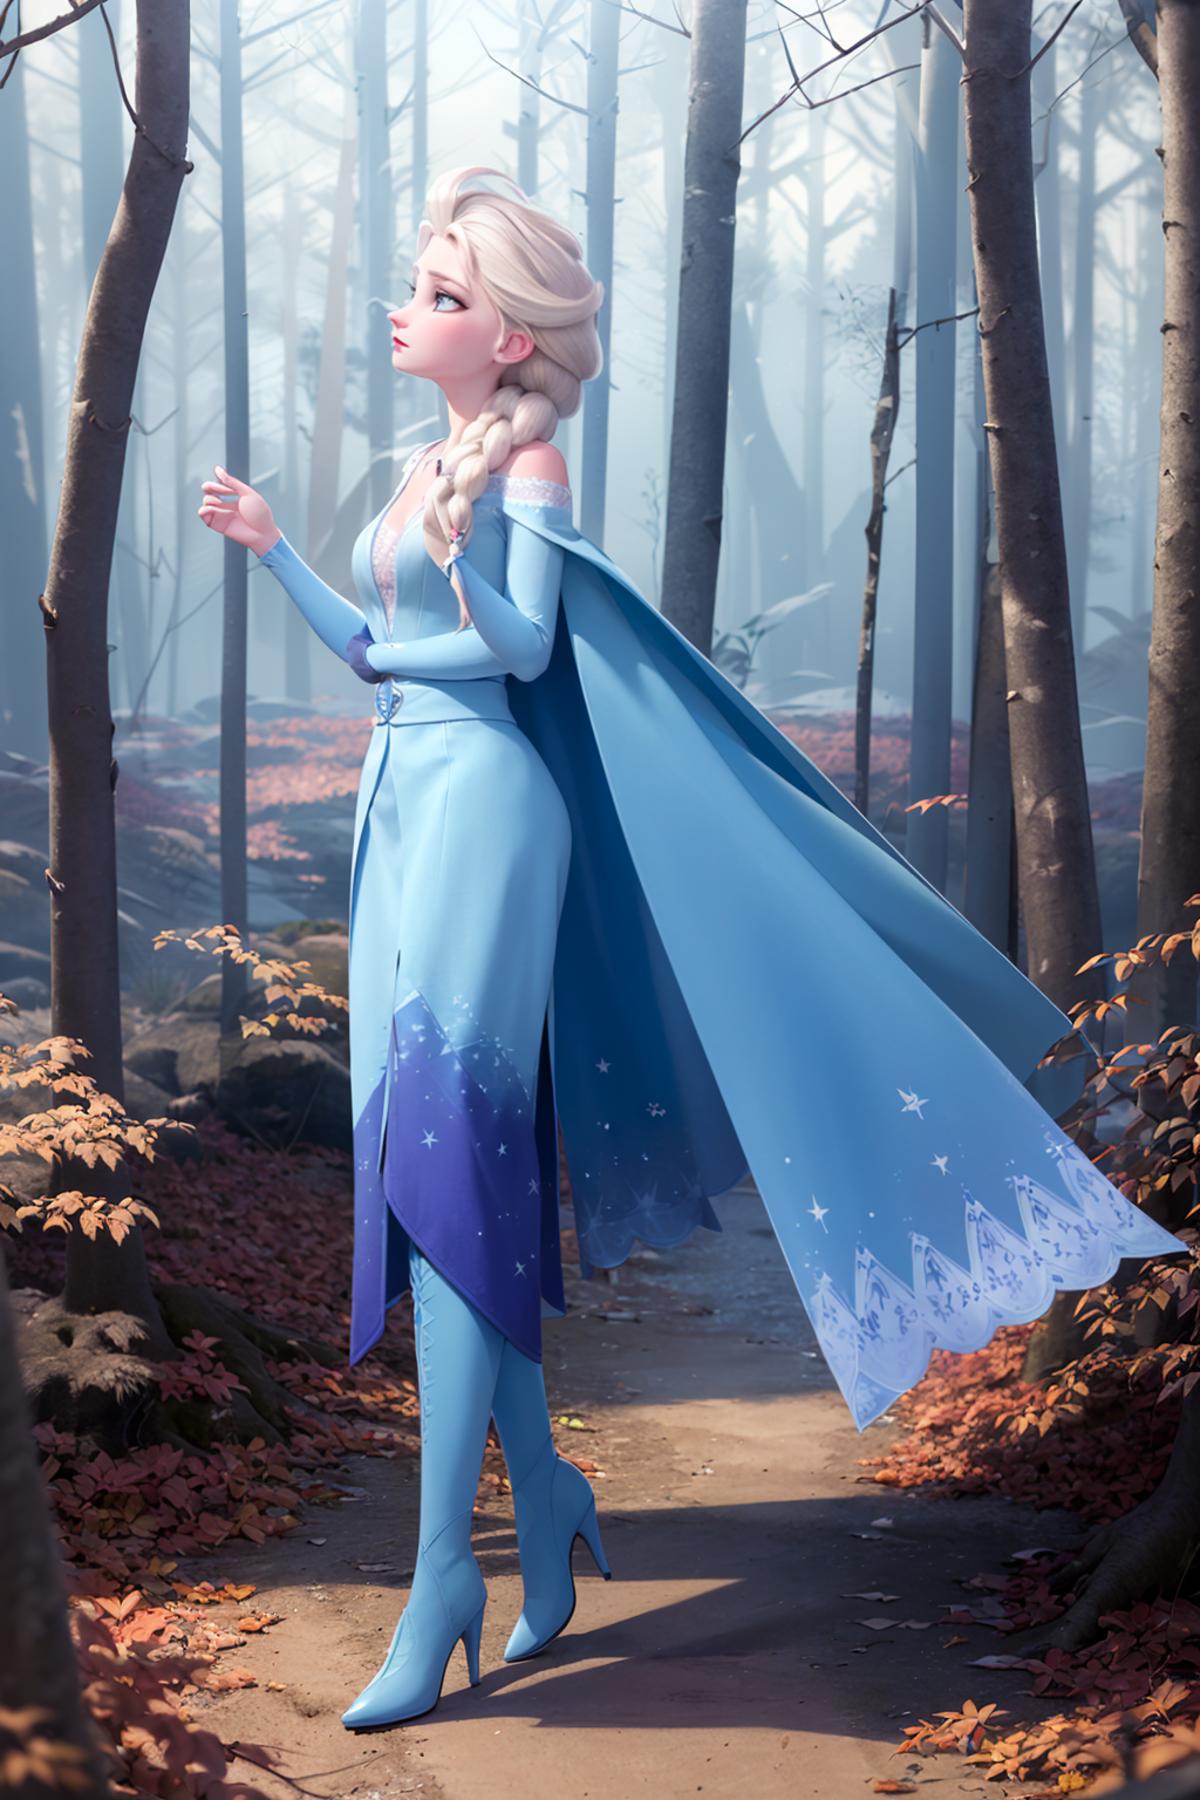 Frozen - Elsa image by chrgg